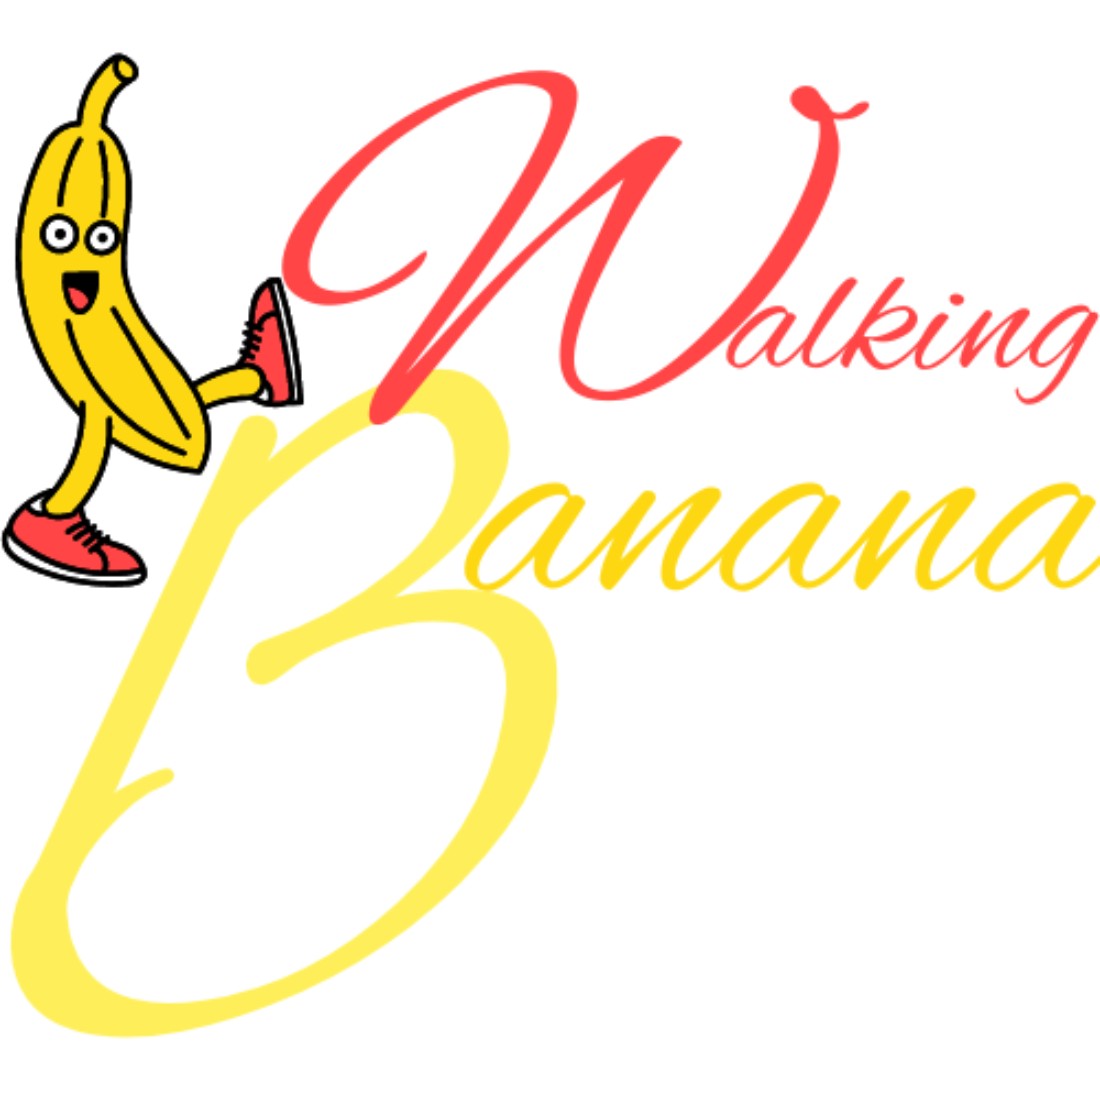 Walking Banana Logo Design cover image.